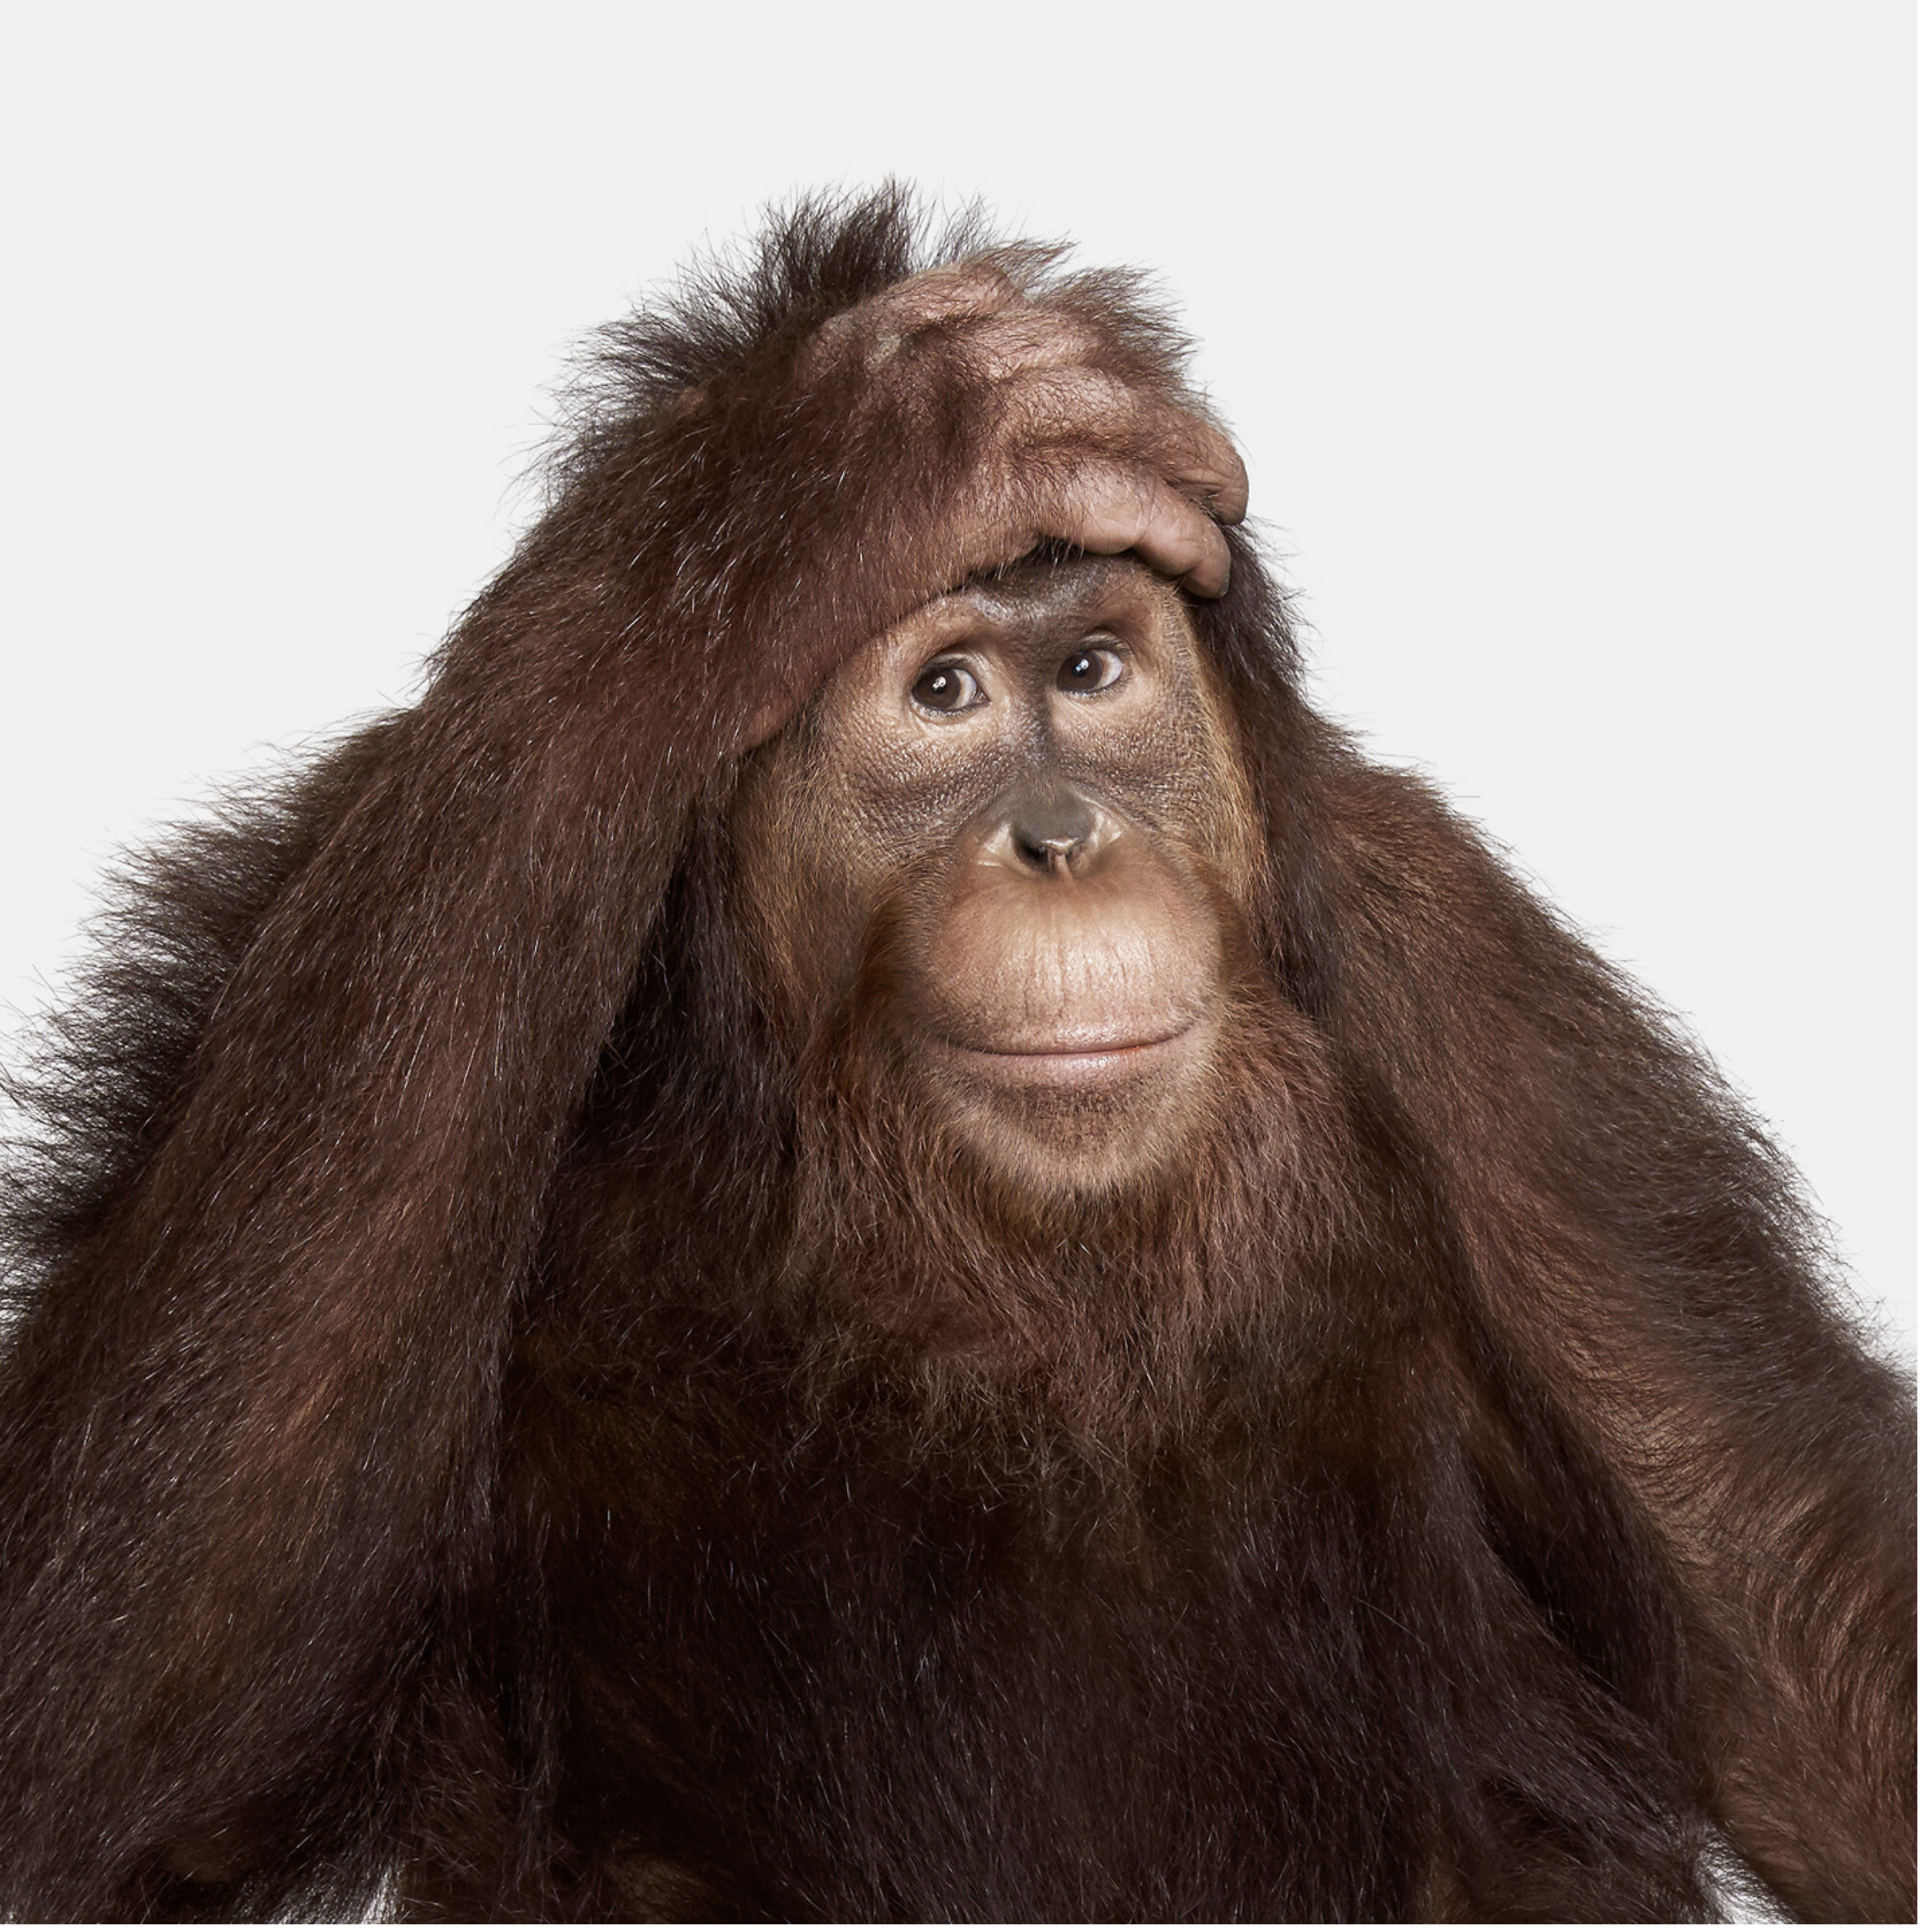 Orangutan No. 1 by Randal Ford